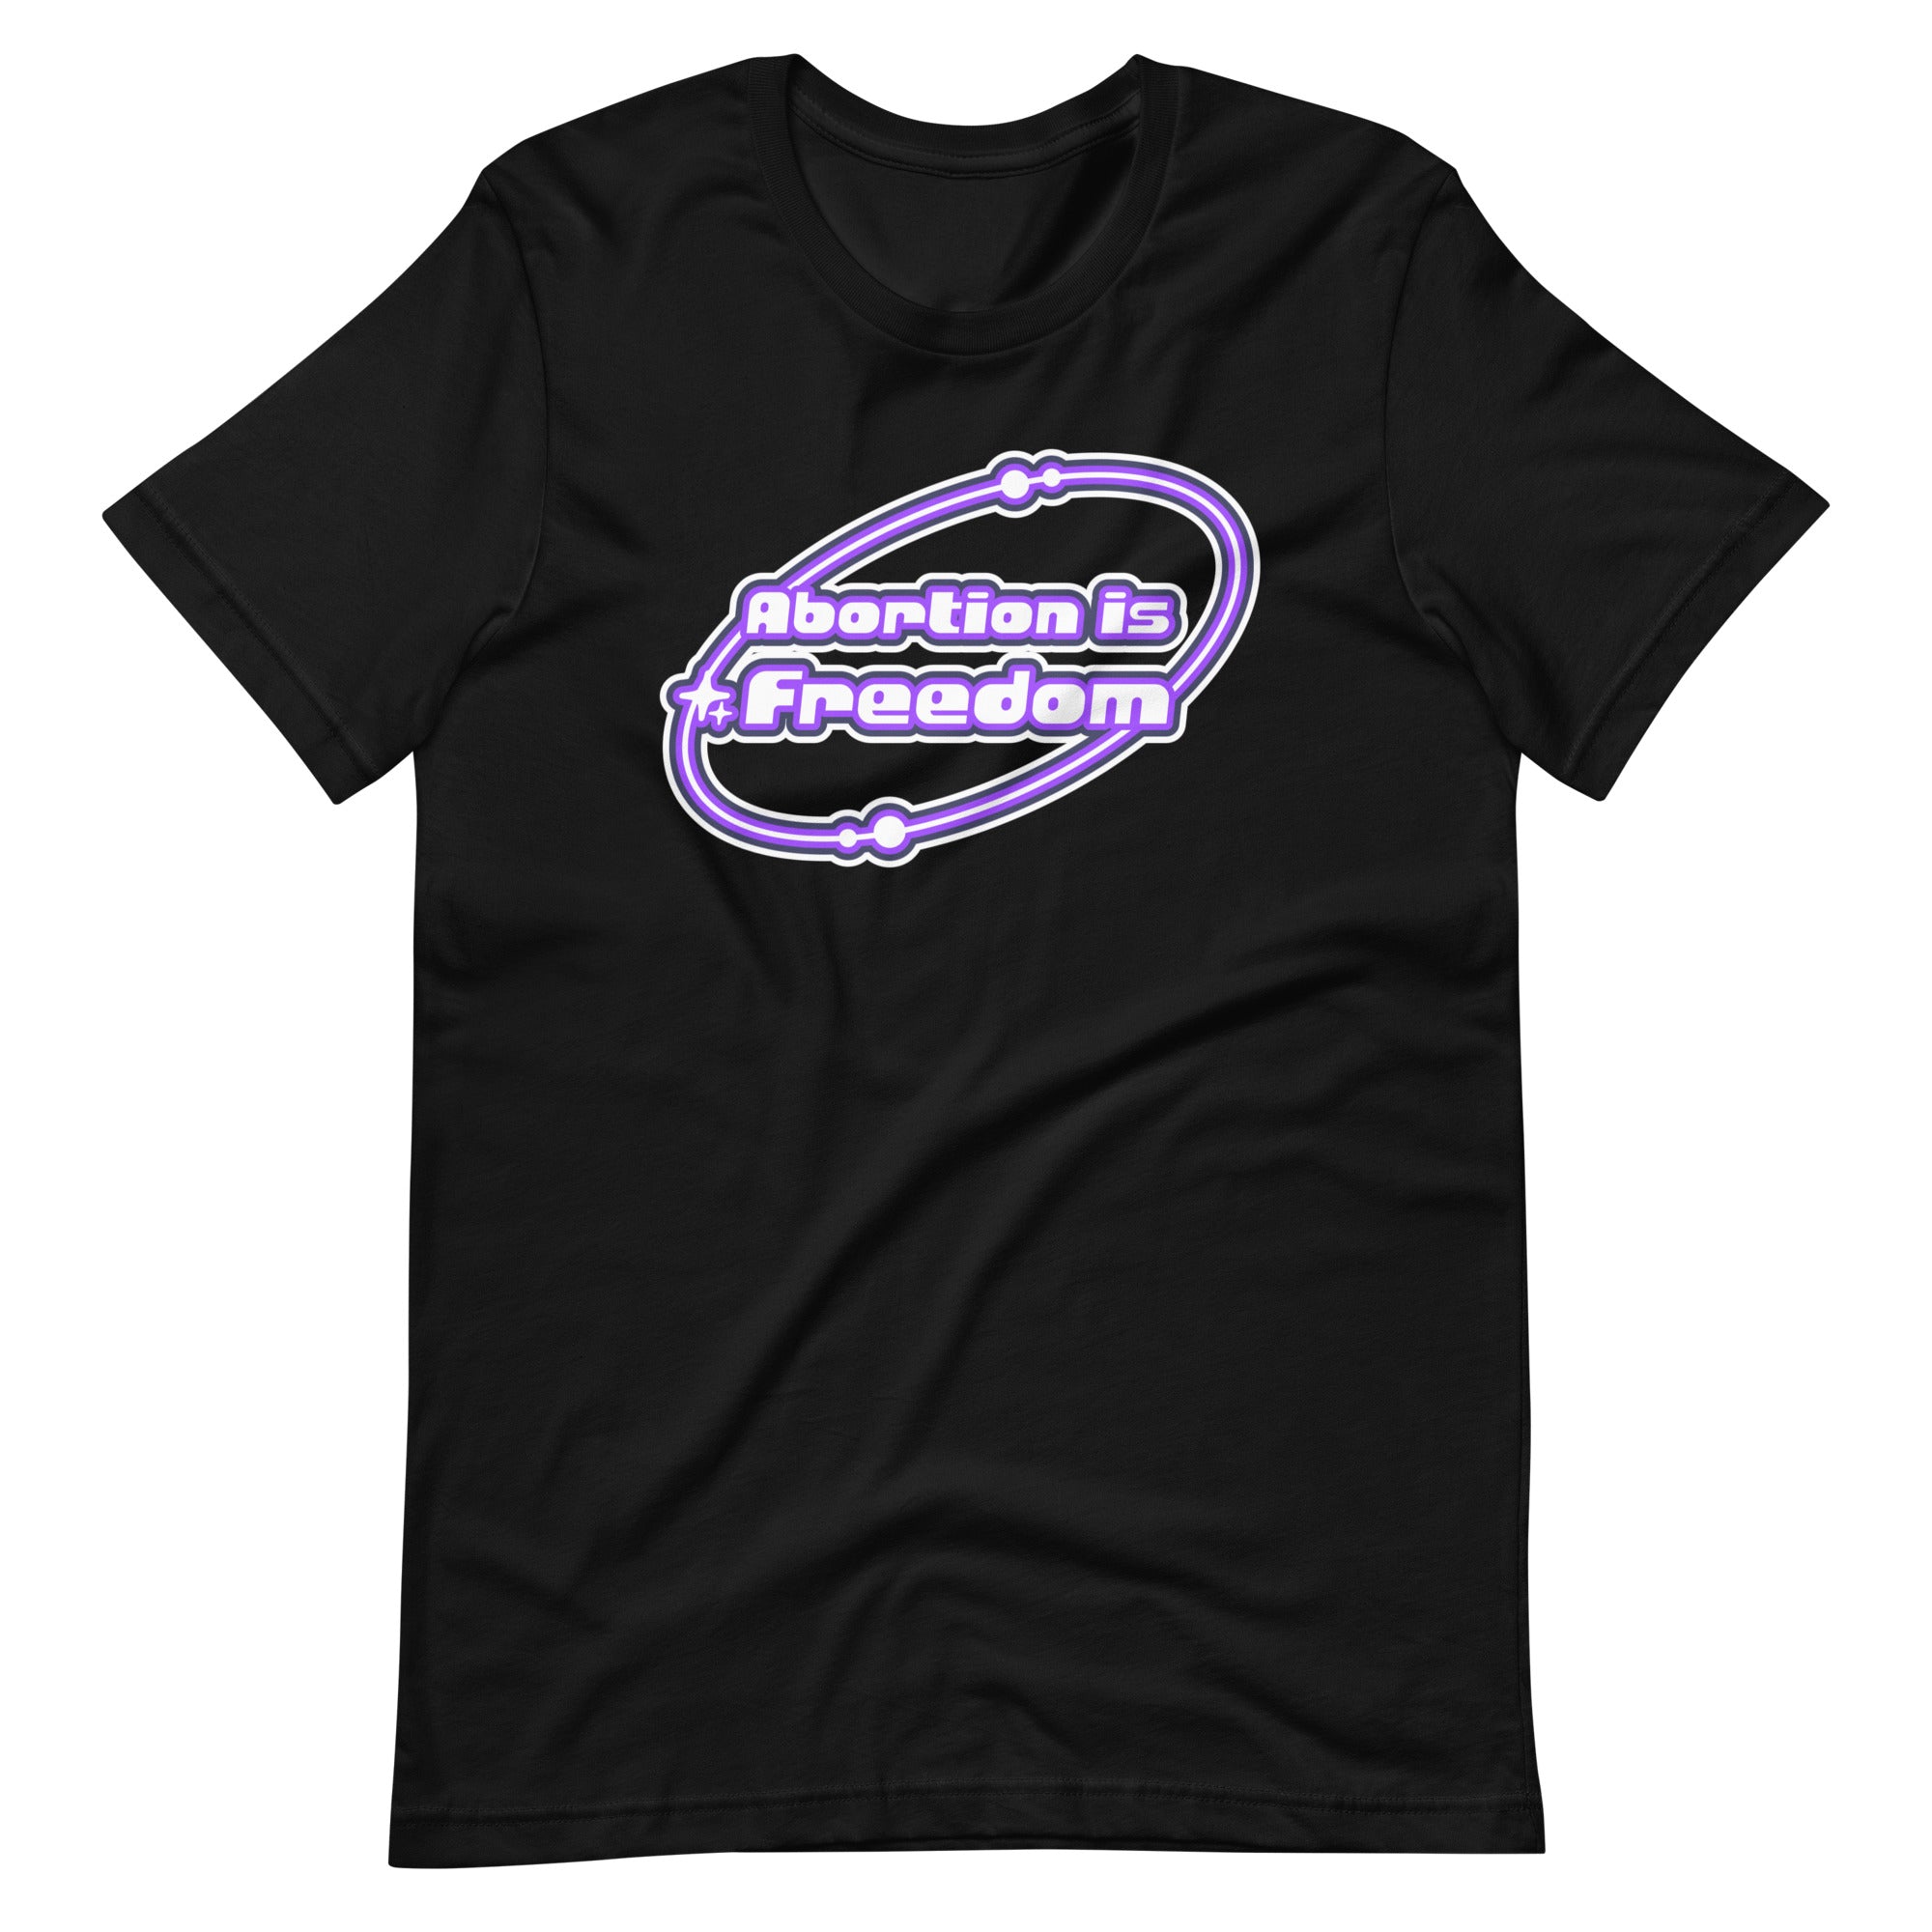 Abortion Is Freedom Black Unisex Feminist T-shirt Shop Women’s Rights T-shirts - Feminist Trash Store 